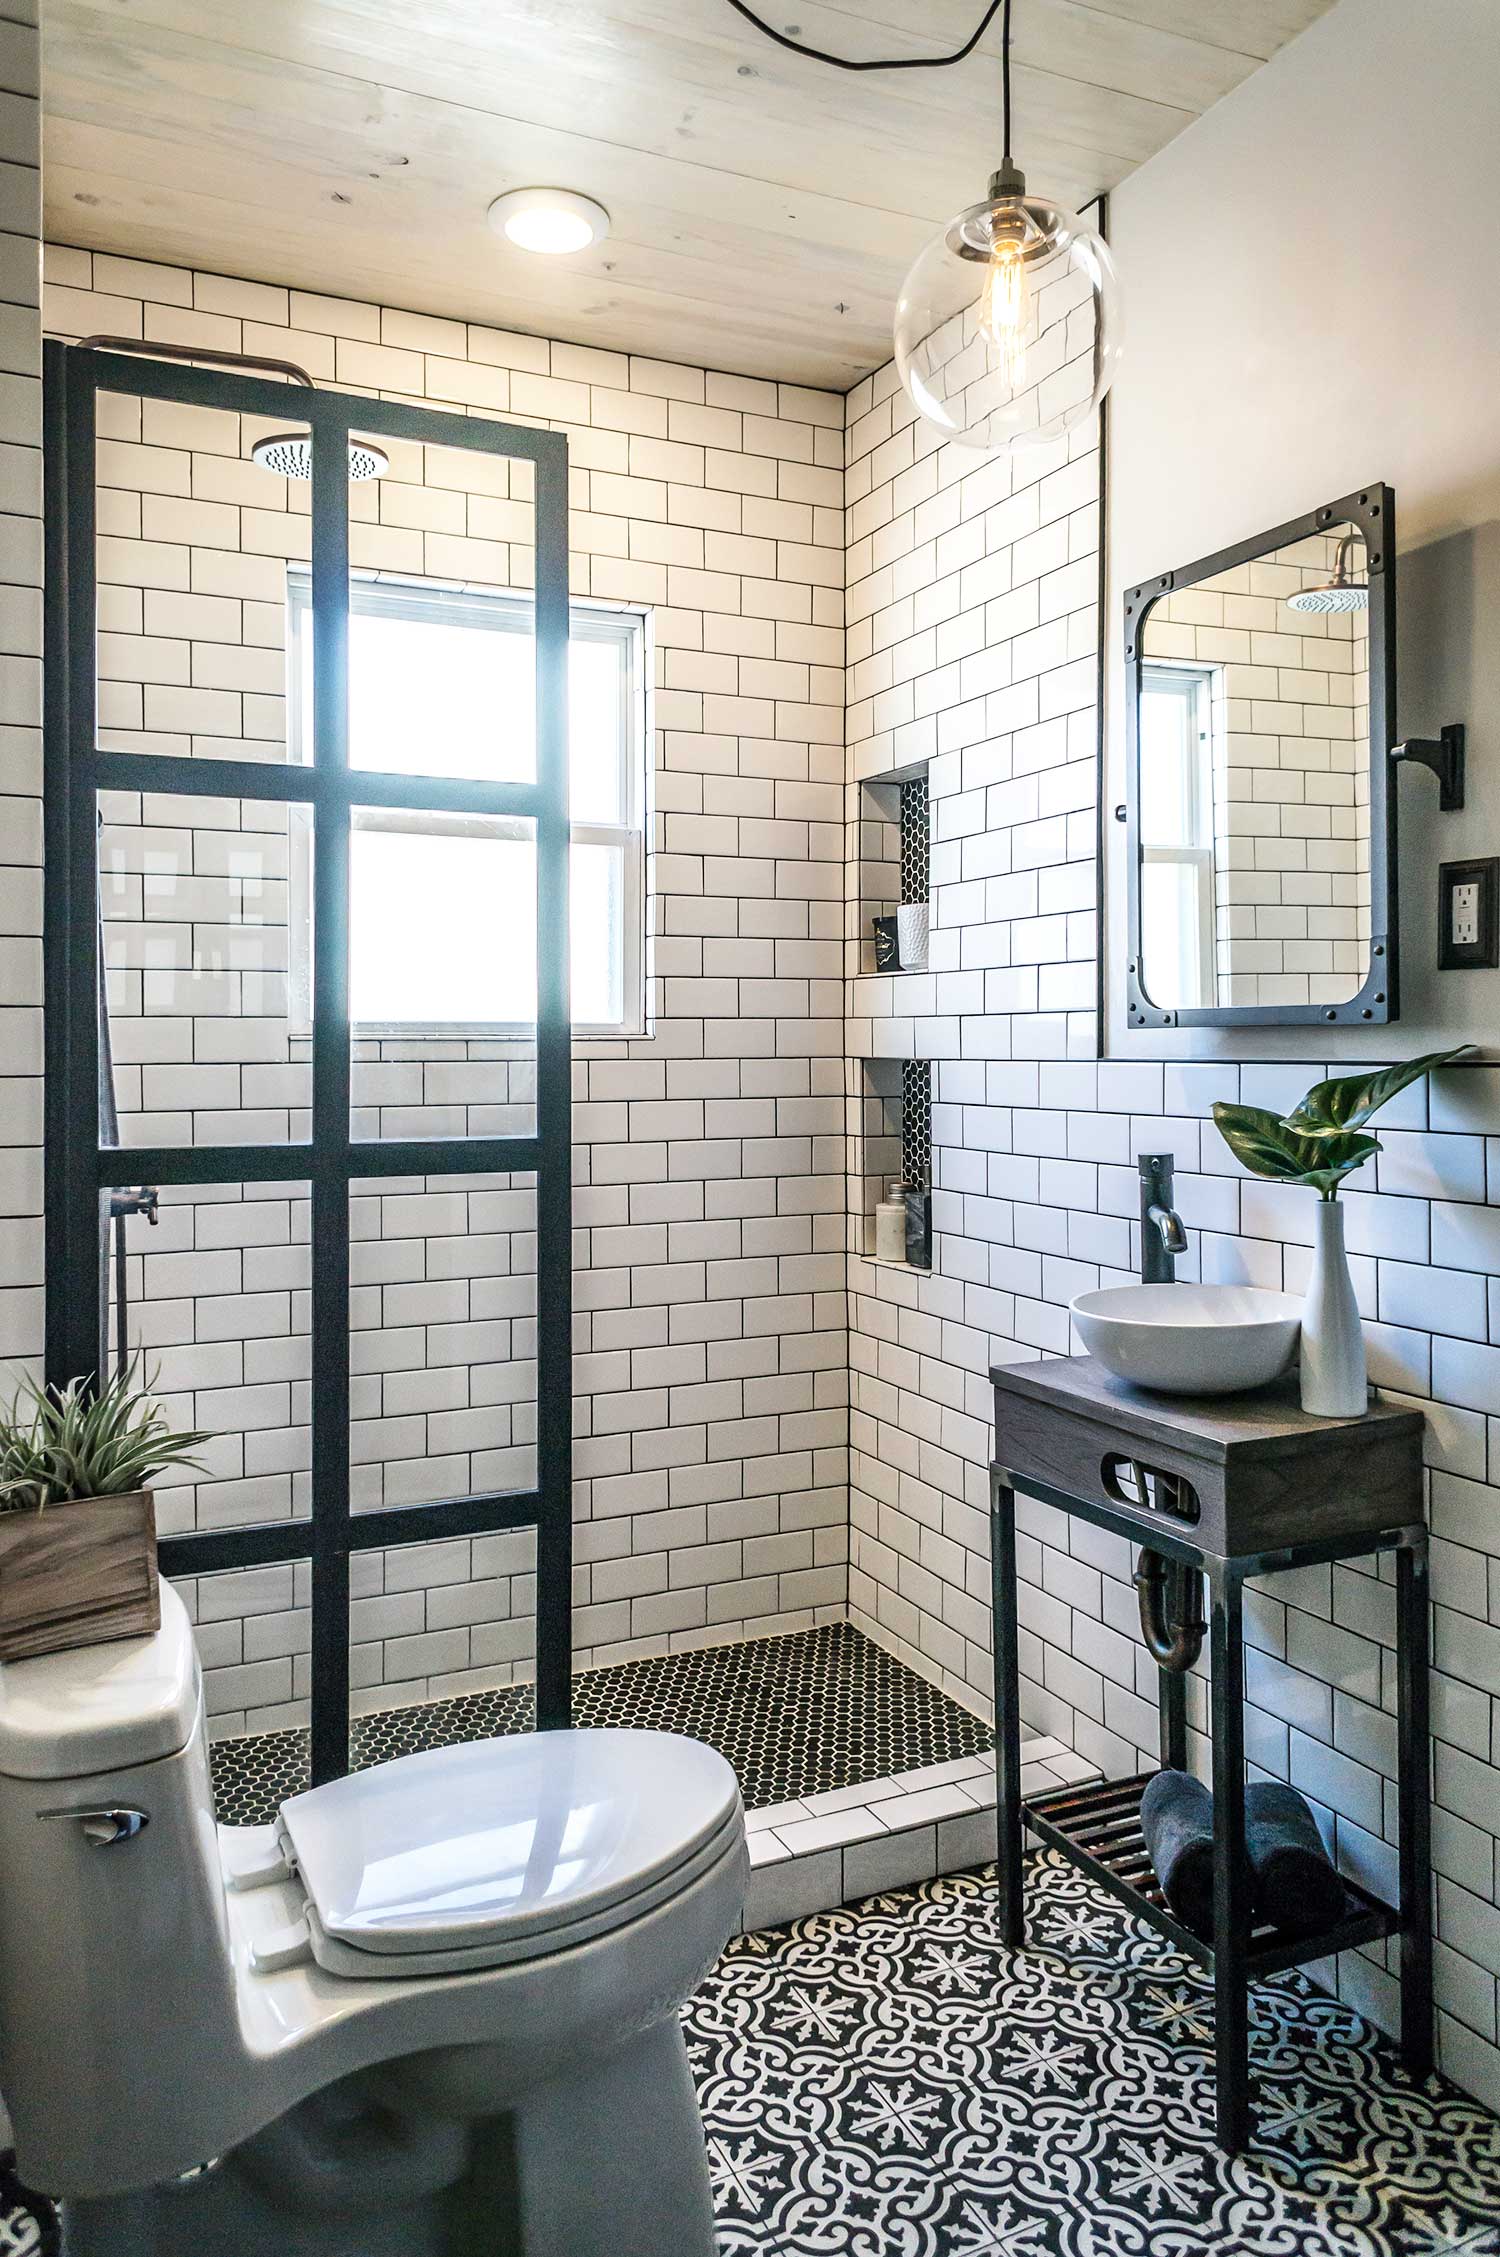 31 Small Bathroom Design Ideas To Get Inspired - Coastel Style Small EncloseD Shower Bathroom